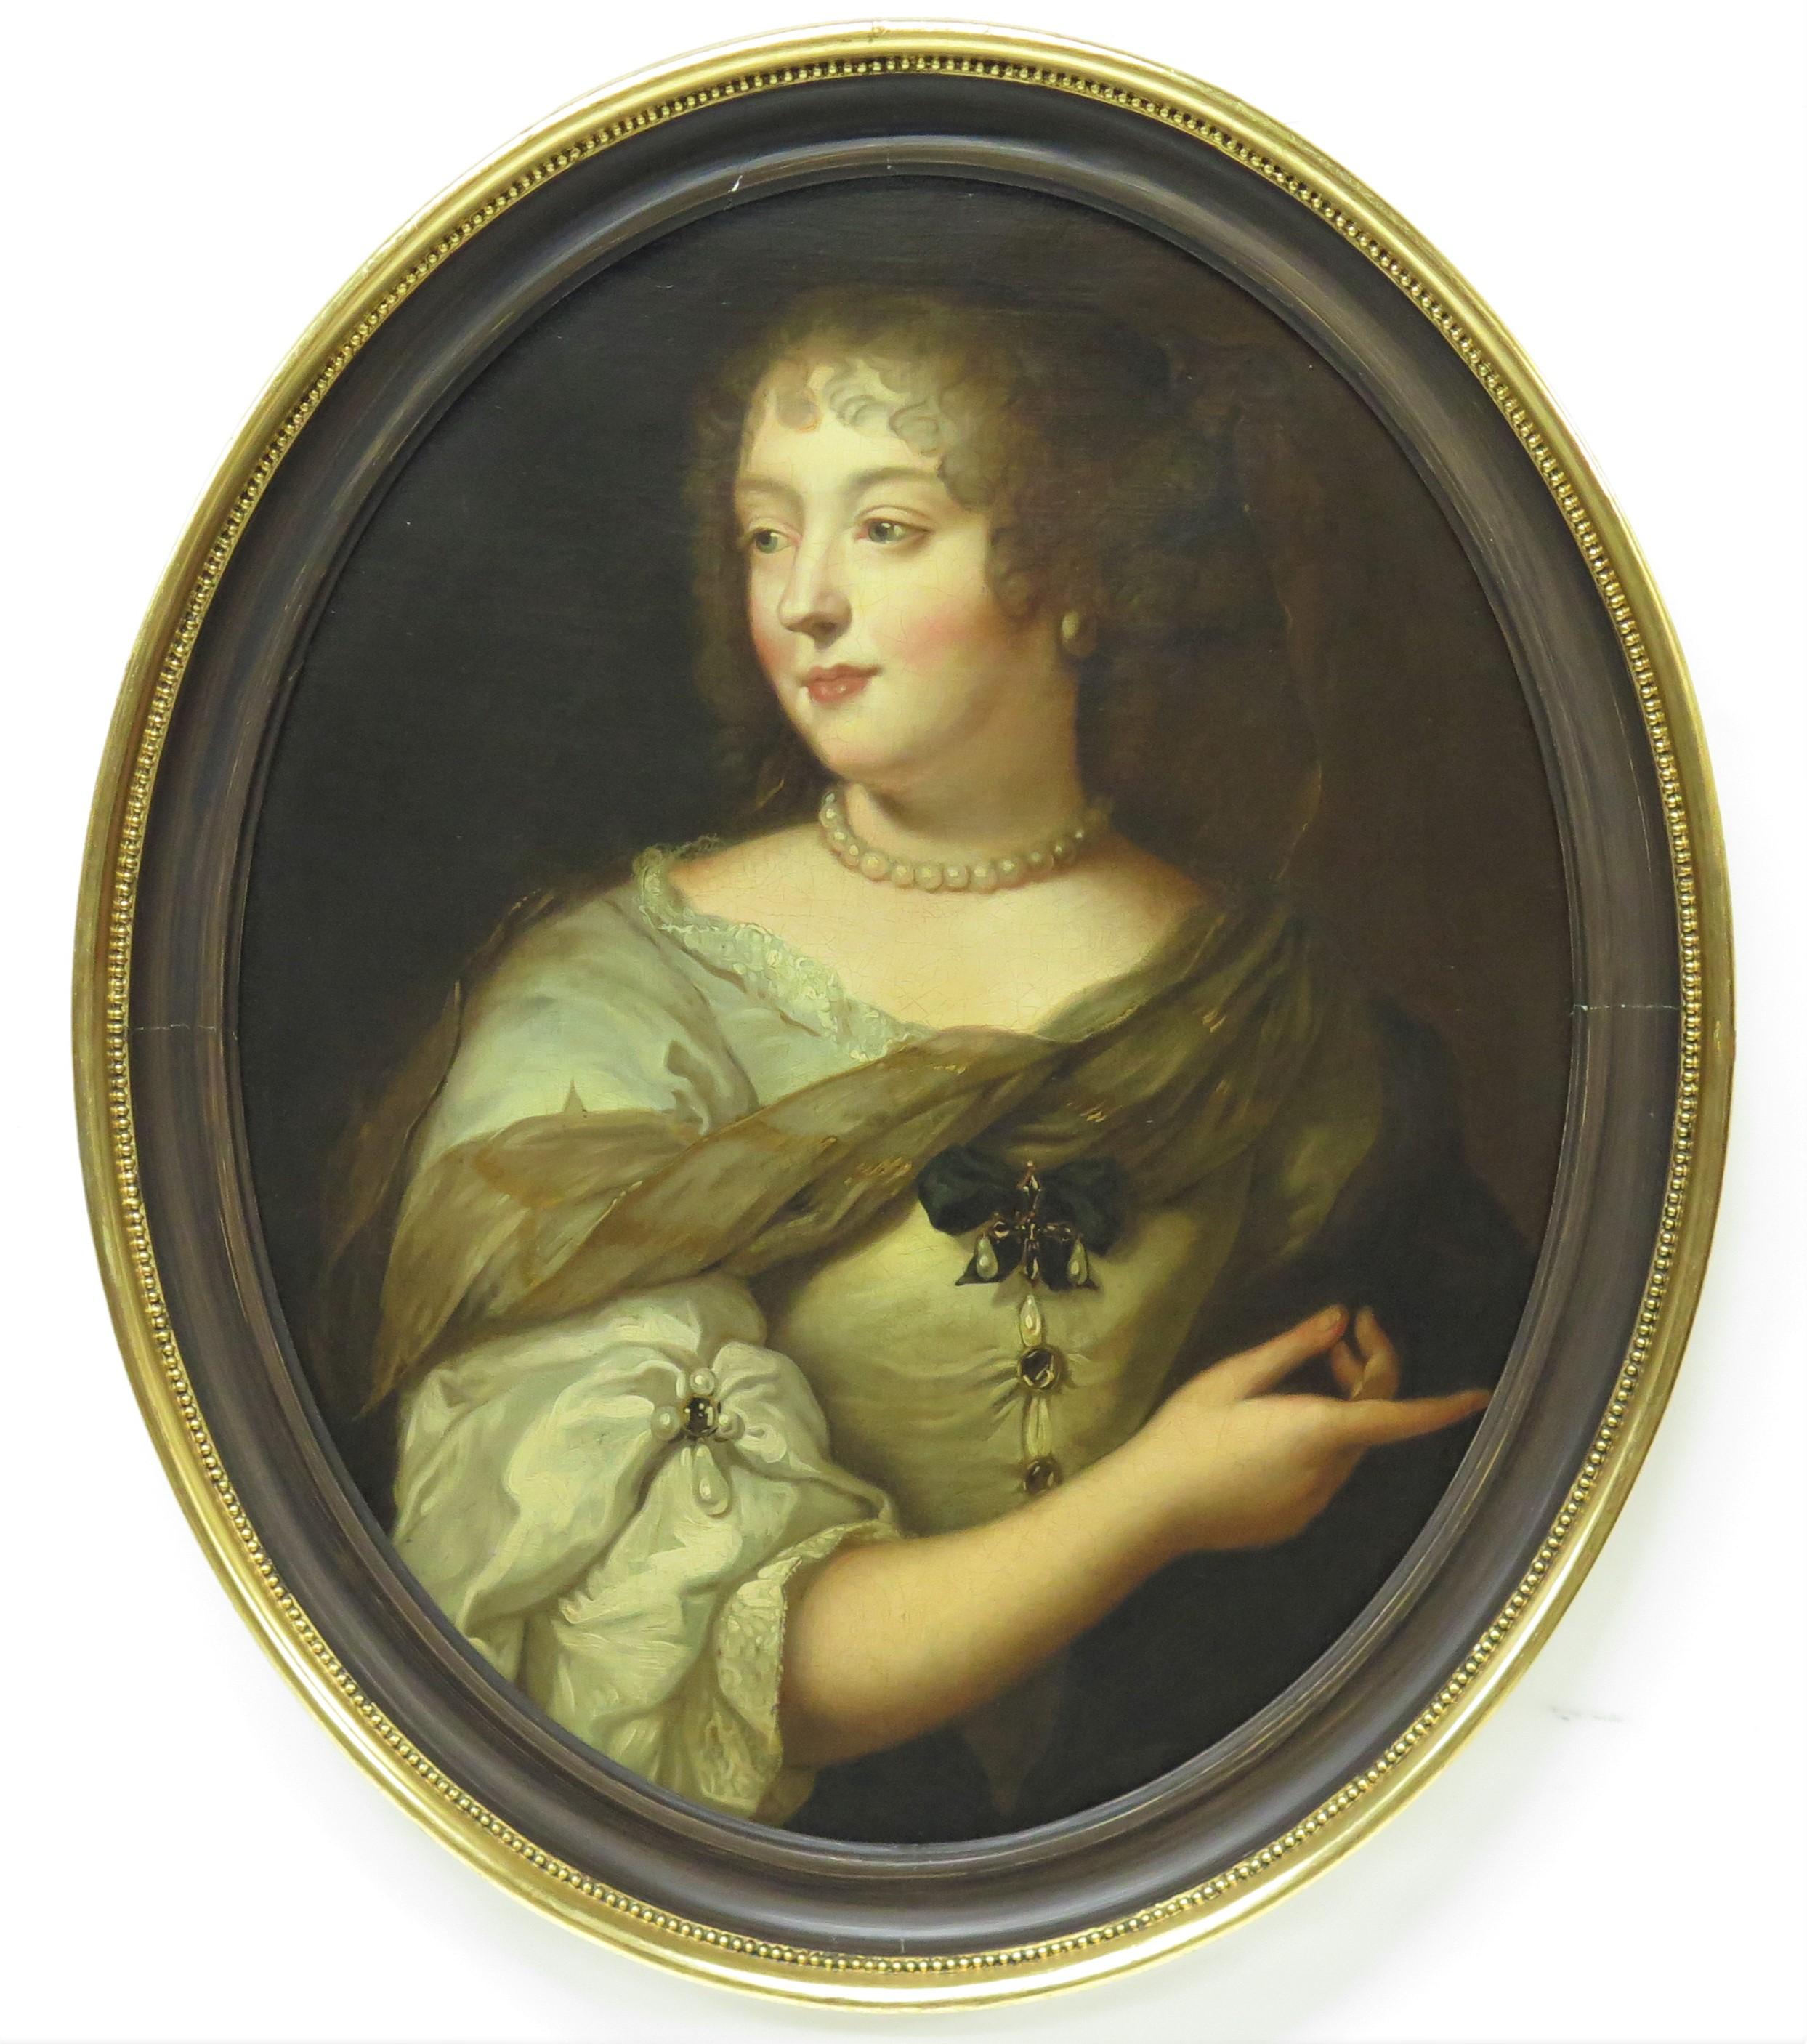 Marie de Rabutin-Chantal, Marquise de Sévigné (France, 1626-1696), after a famous portrait by painter and engraver Claude Lefèbvre (France, 1633–1675)

also widely known as Madame de Sévigné or Mme de Sévigné, was a French aristocrat, remembered for